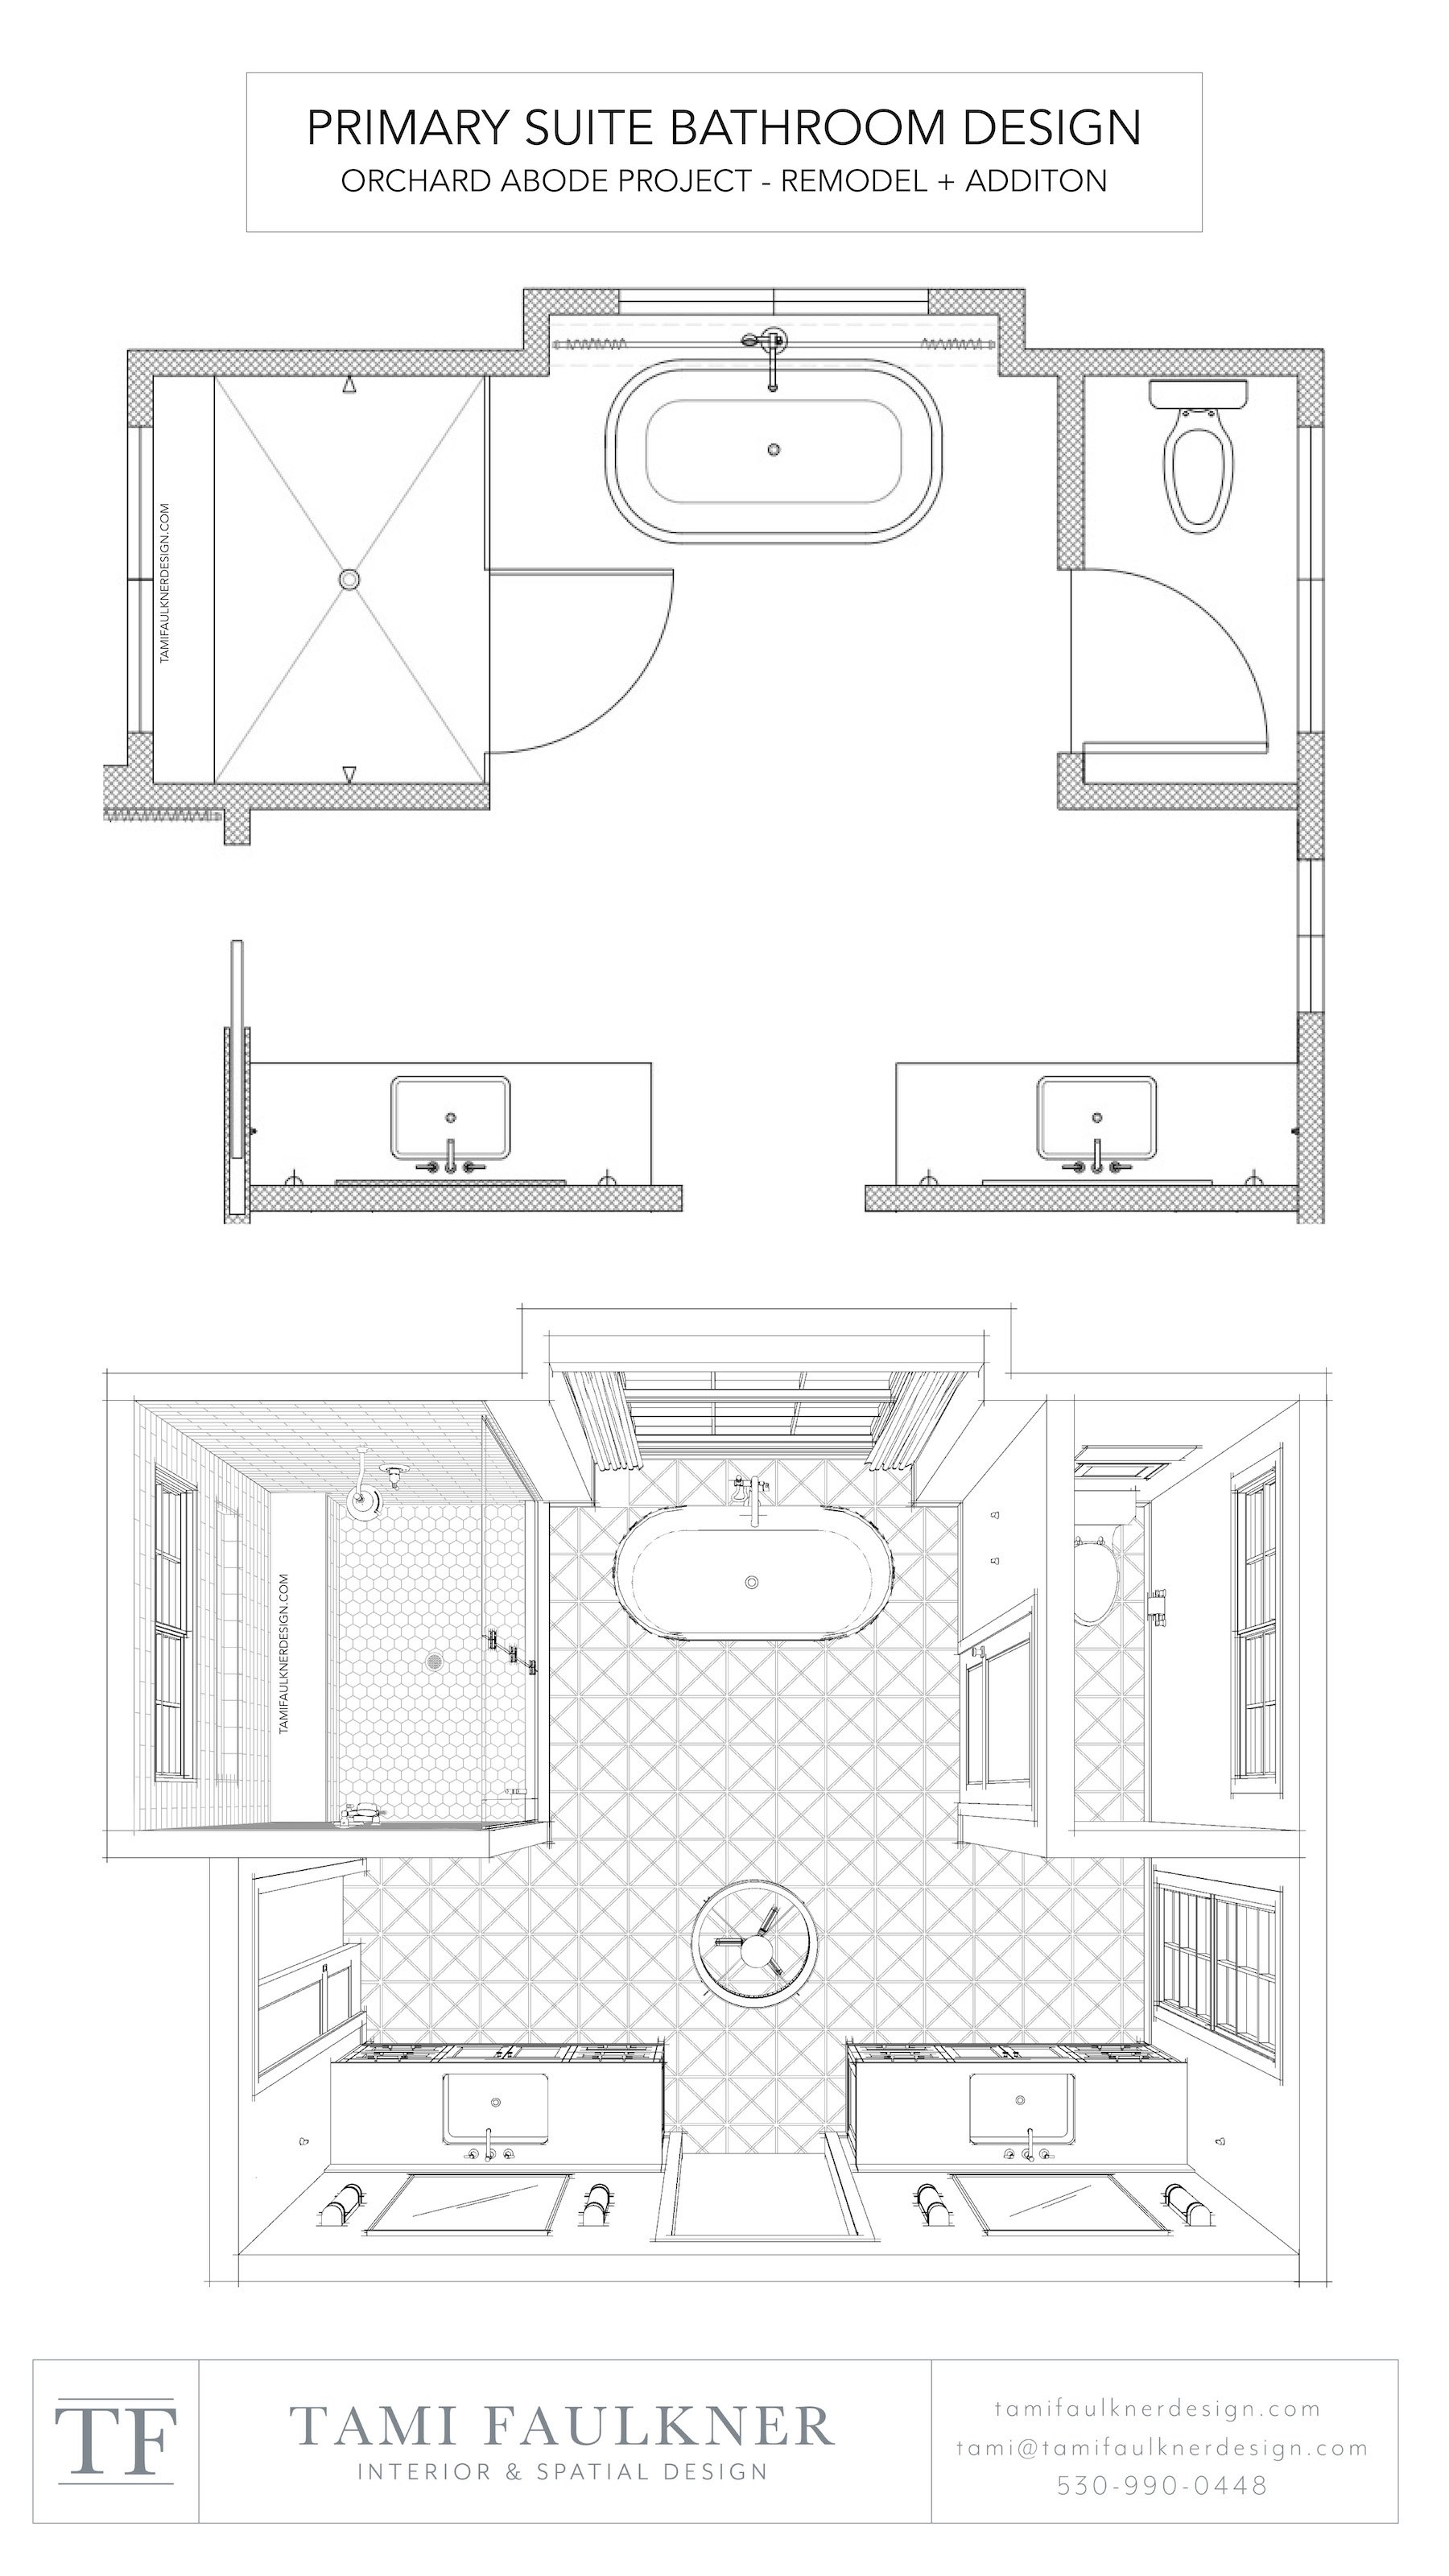 PRIMARY BATHROOM DESIGN TIPS FOR AGING IN PLACE — TAMI FAULKNER DESIGN